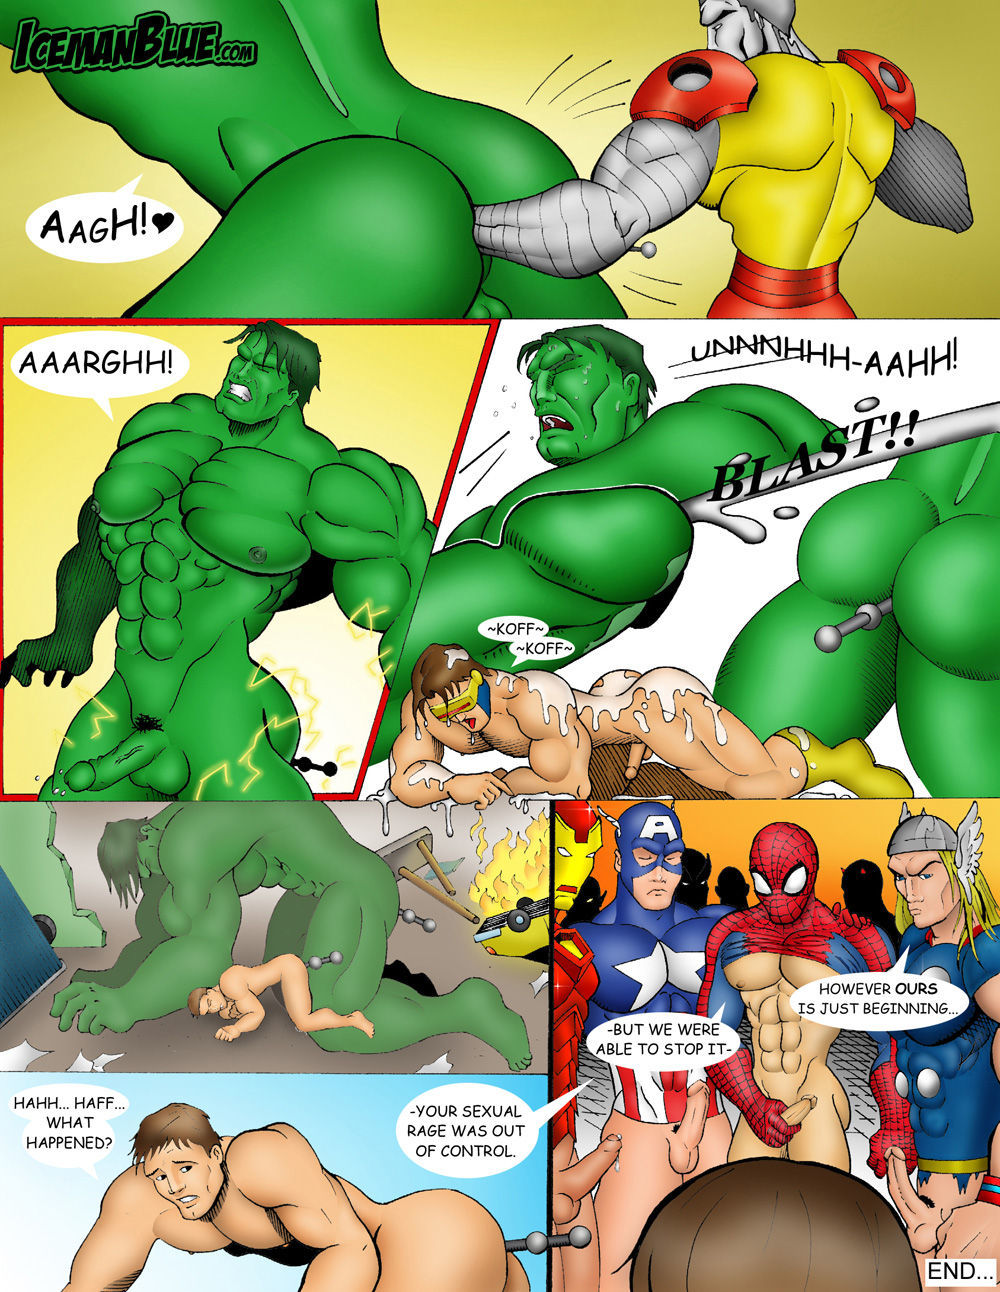 - Hulk in Heat page 1